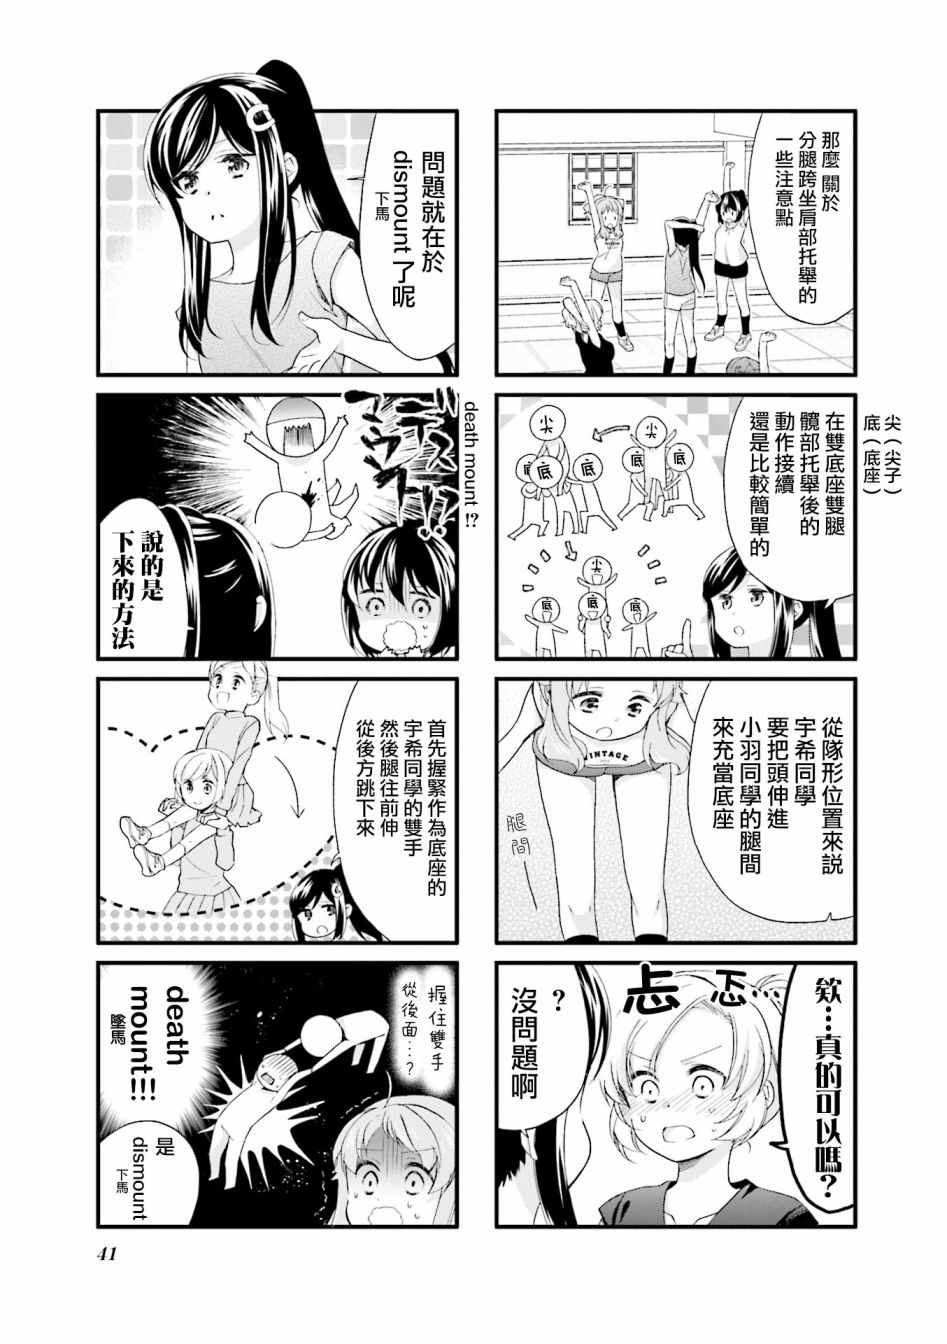 《Anima Yell!》漫画 Anima Yell 025集